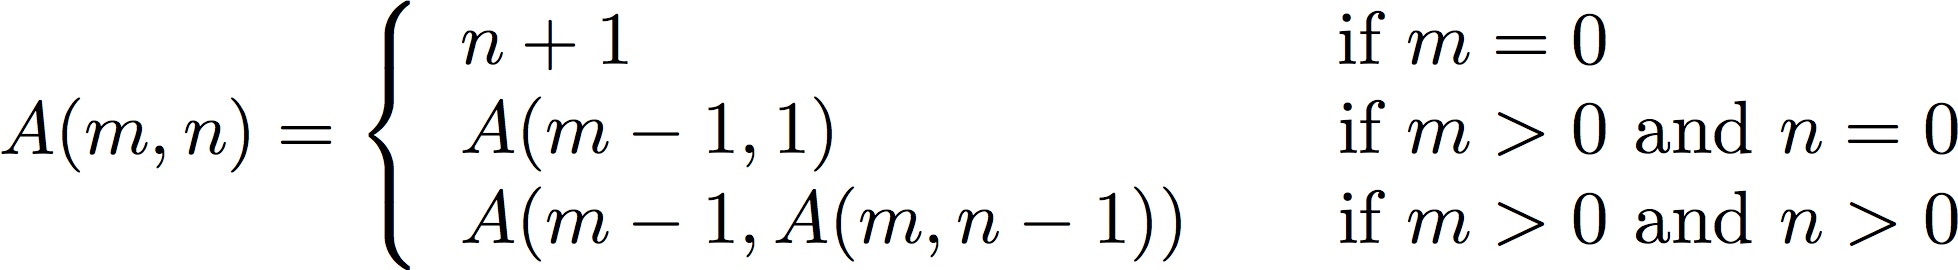 Ackermann's function definition